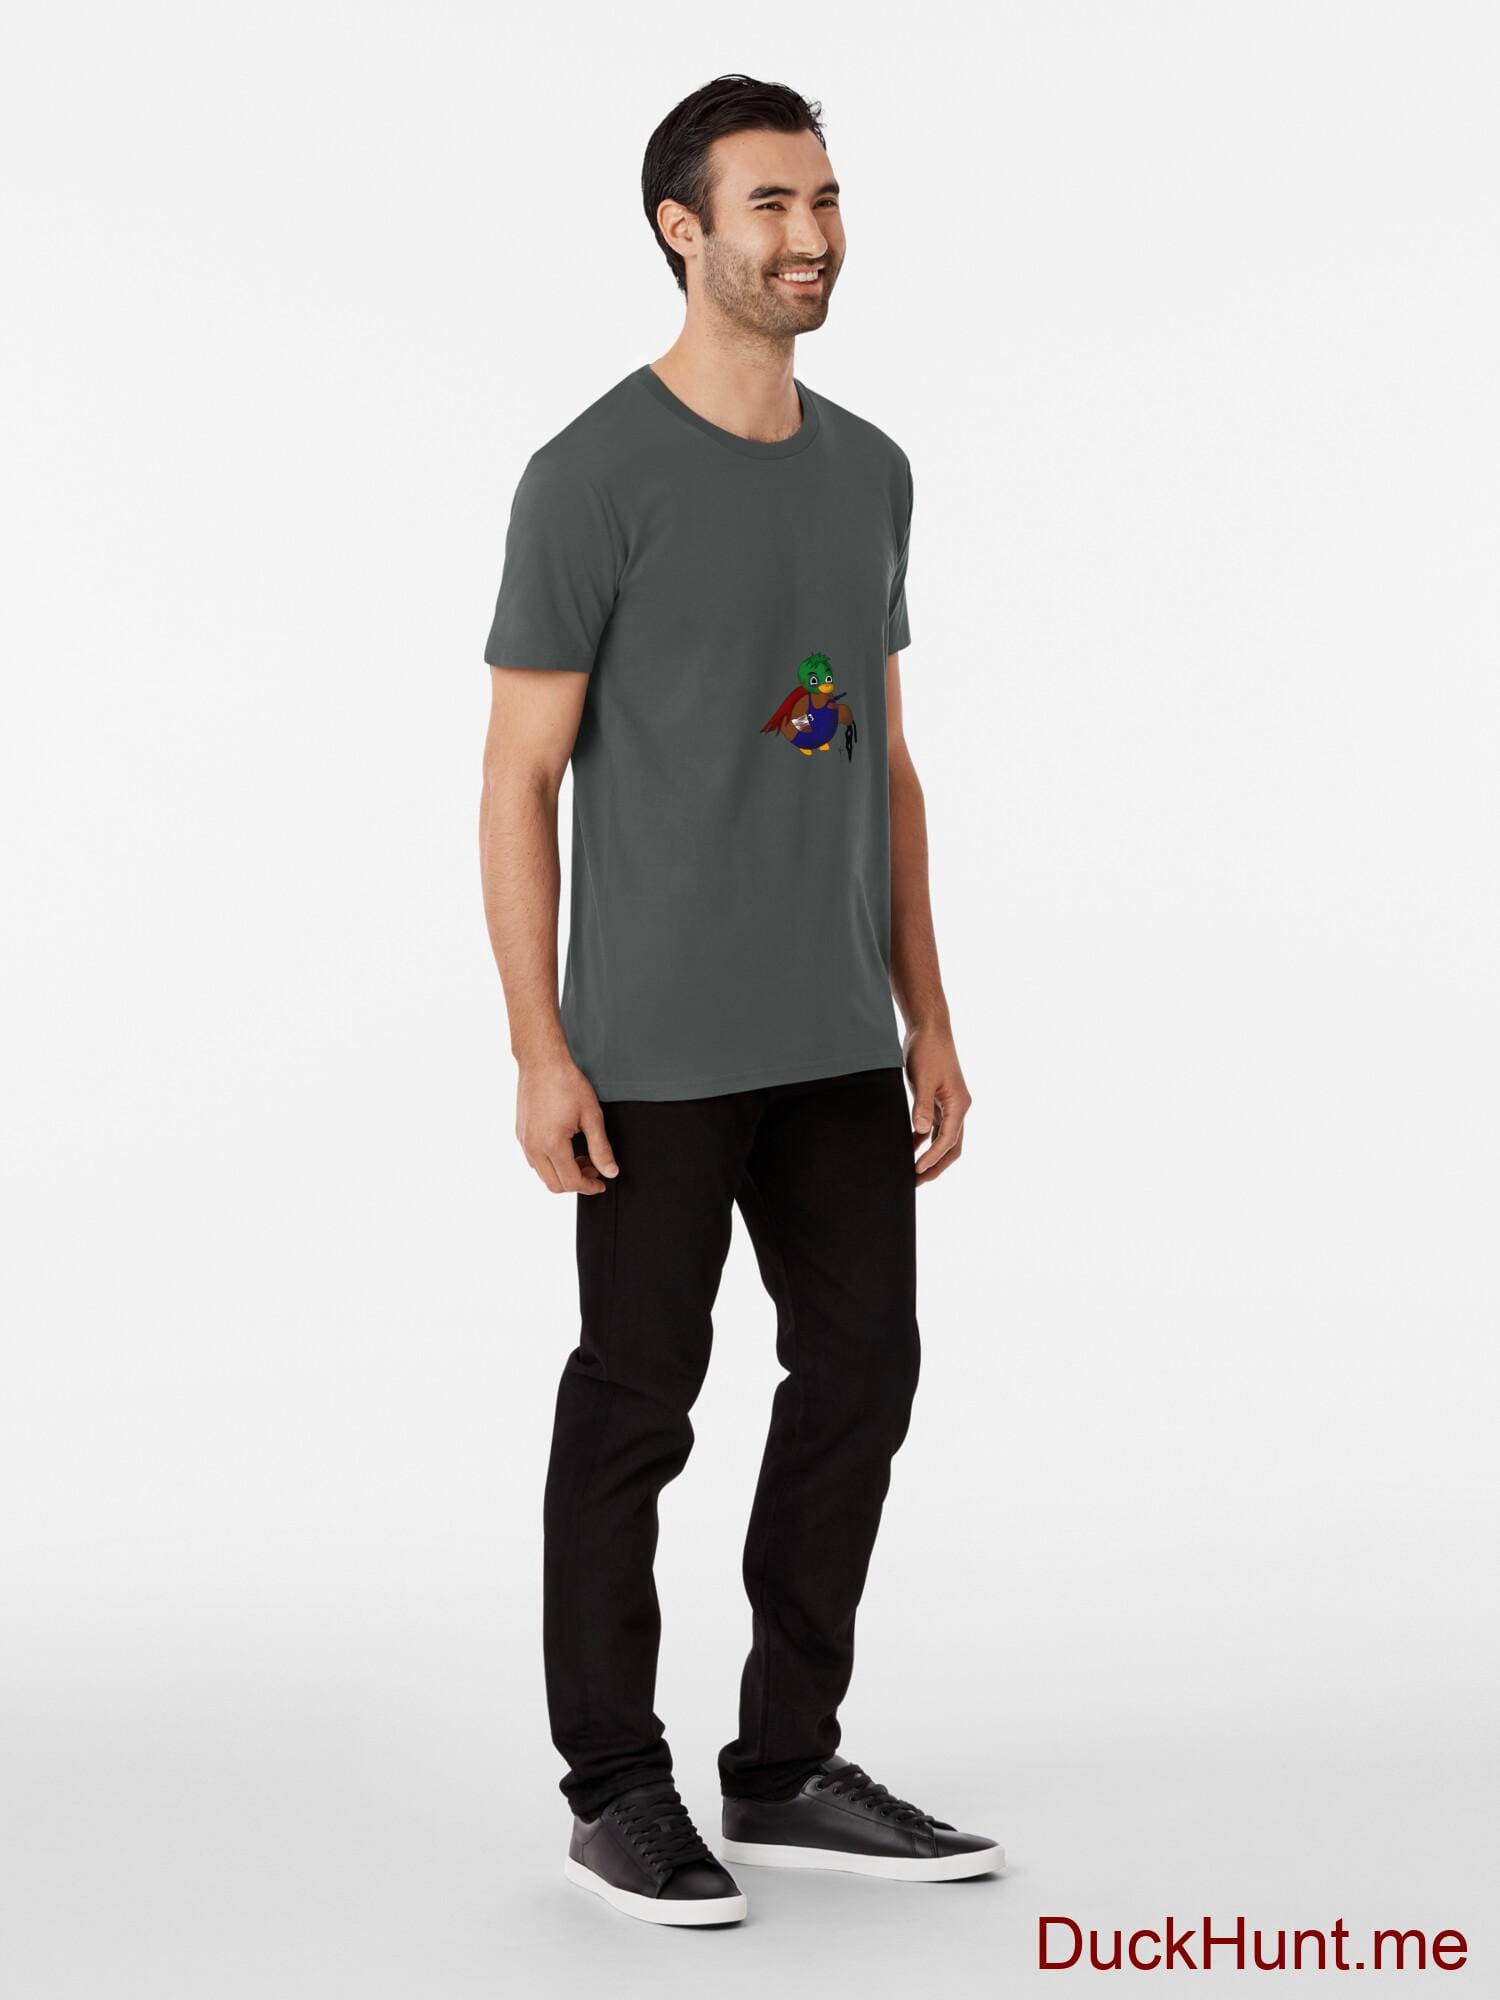 Dead DuckHunt Boss (smokeless) Dark Grey Premium T-Shirt (Front printed) alternative image 2